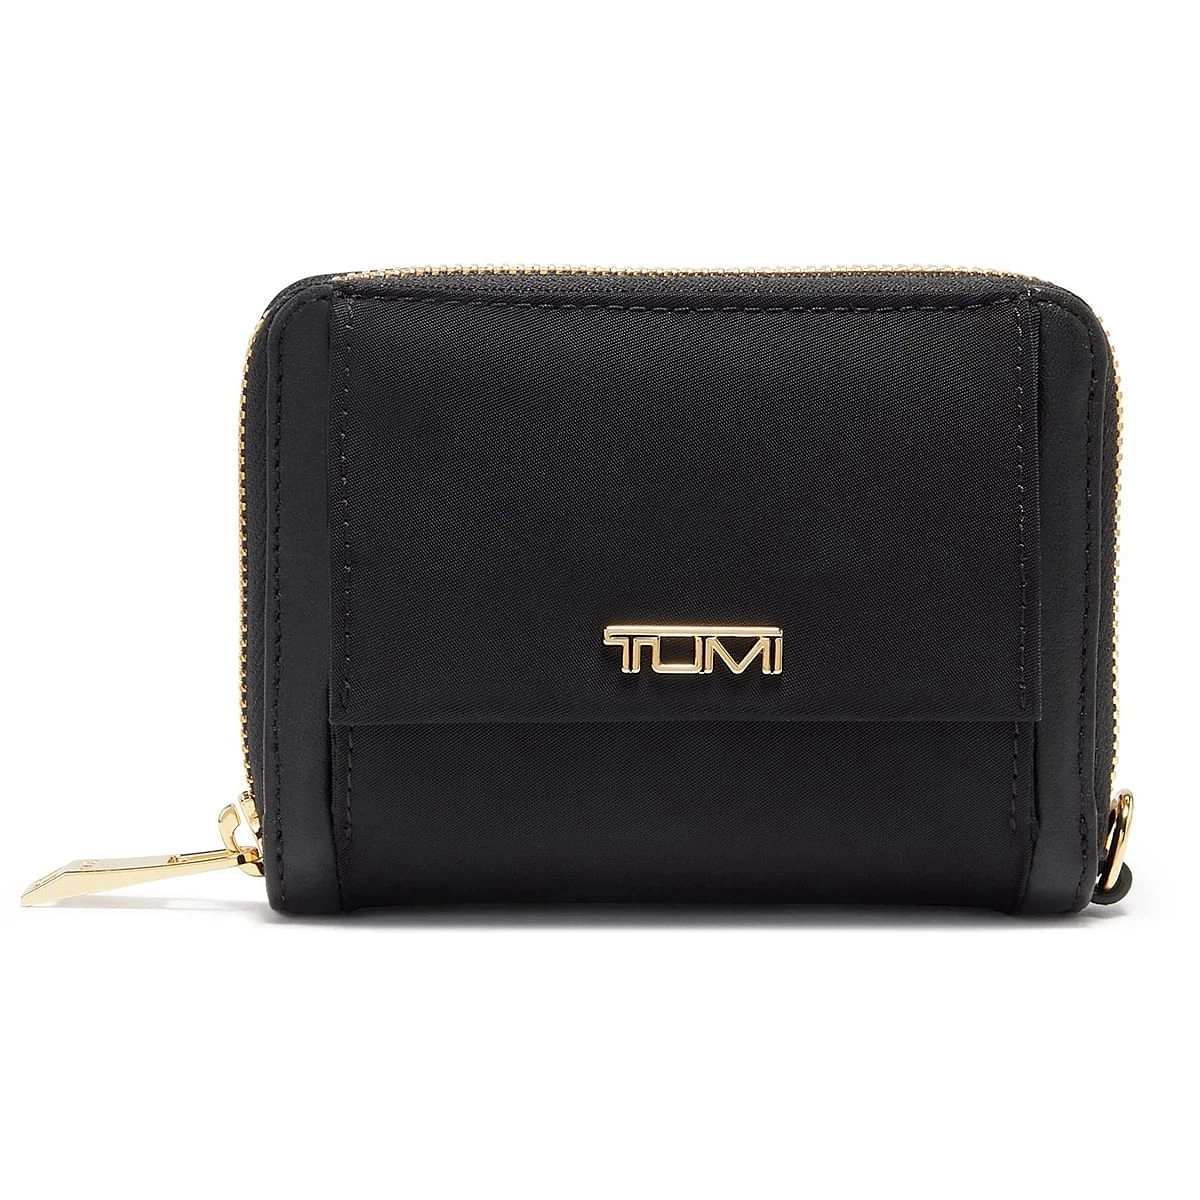 TUMI Double Zip Leather Wallet - Coin - Phone Case - Wristlet Black White |  eBay